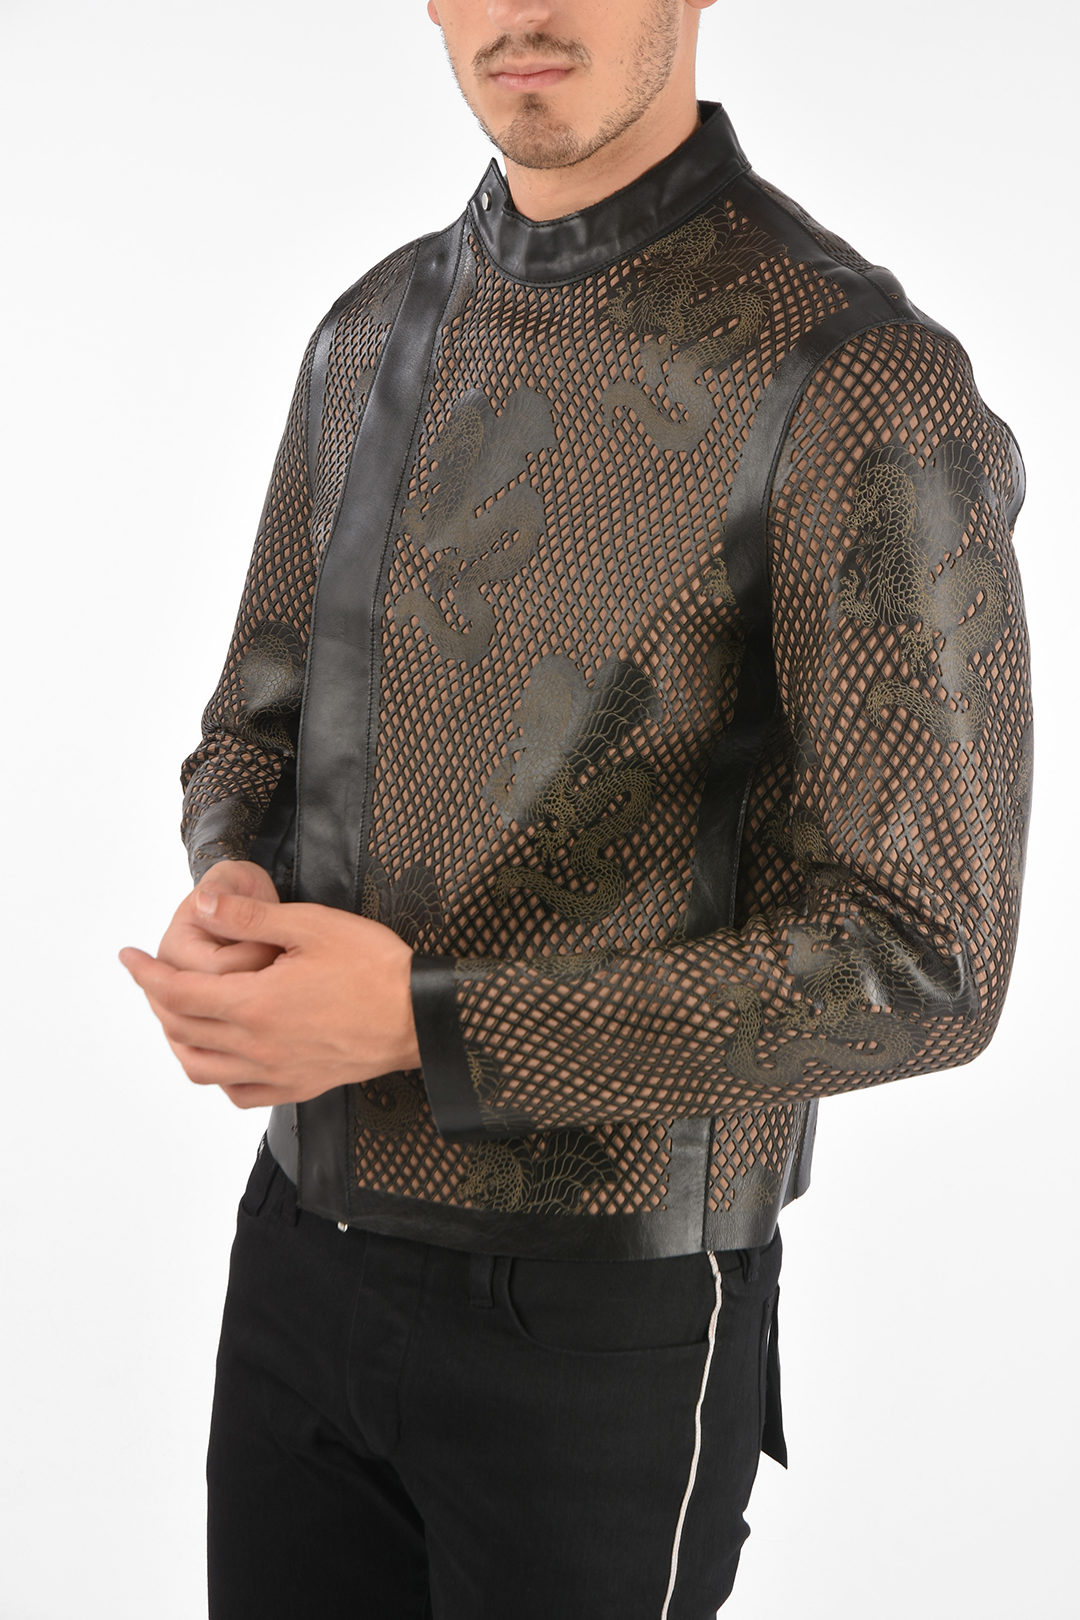 Armani EMPORIO ARMANI Leather Embroidered Jacket men - Glamood Outlet